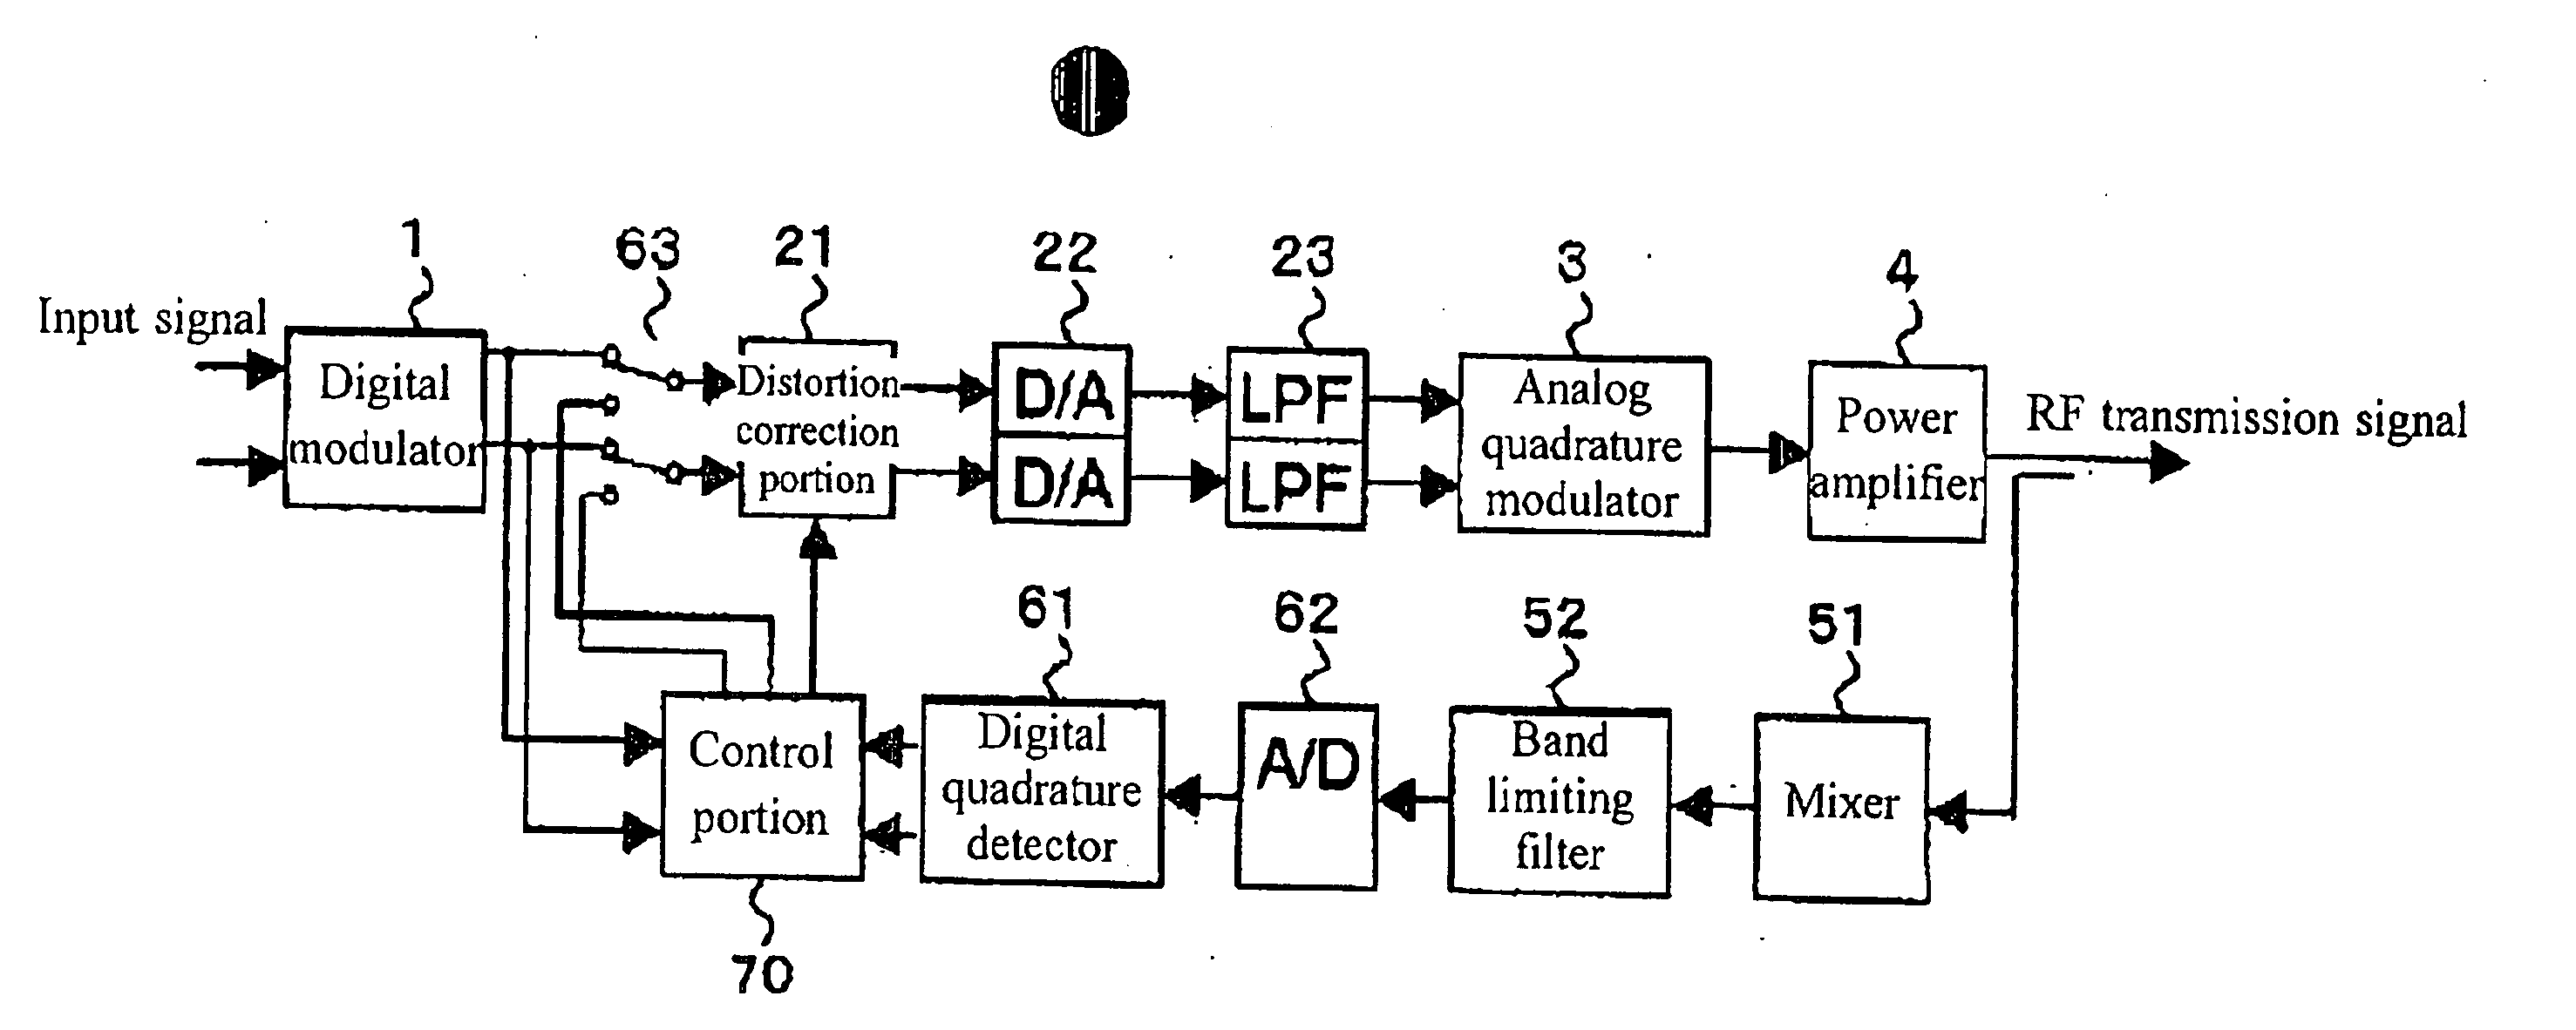 Distortion compensation quadrature modulator and radio transmitter